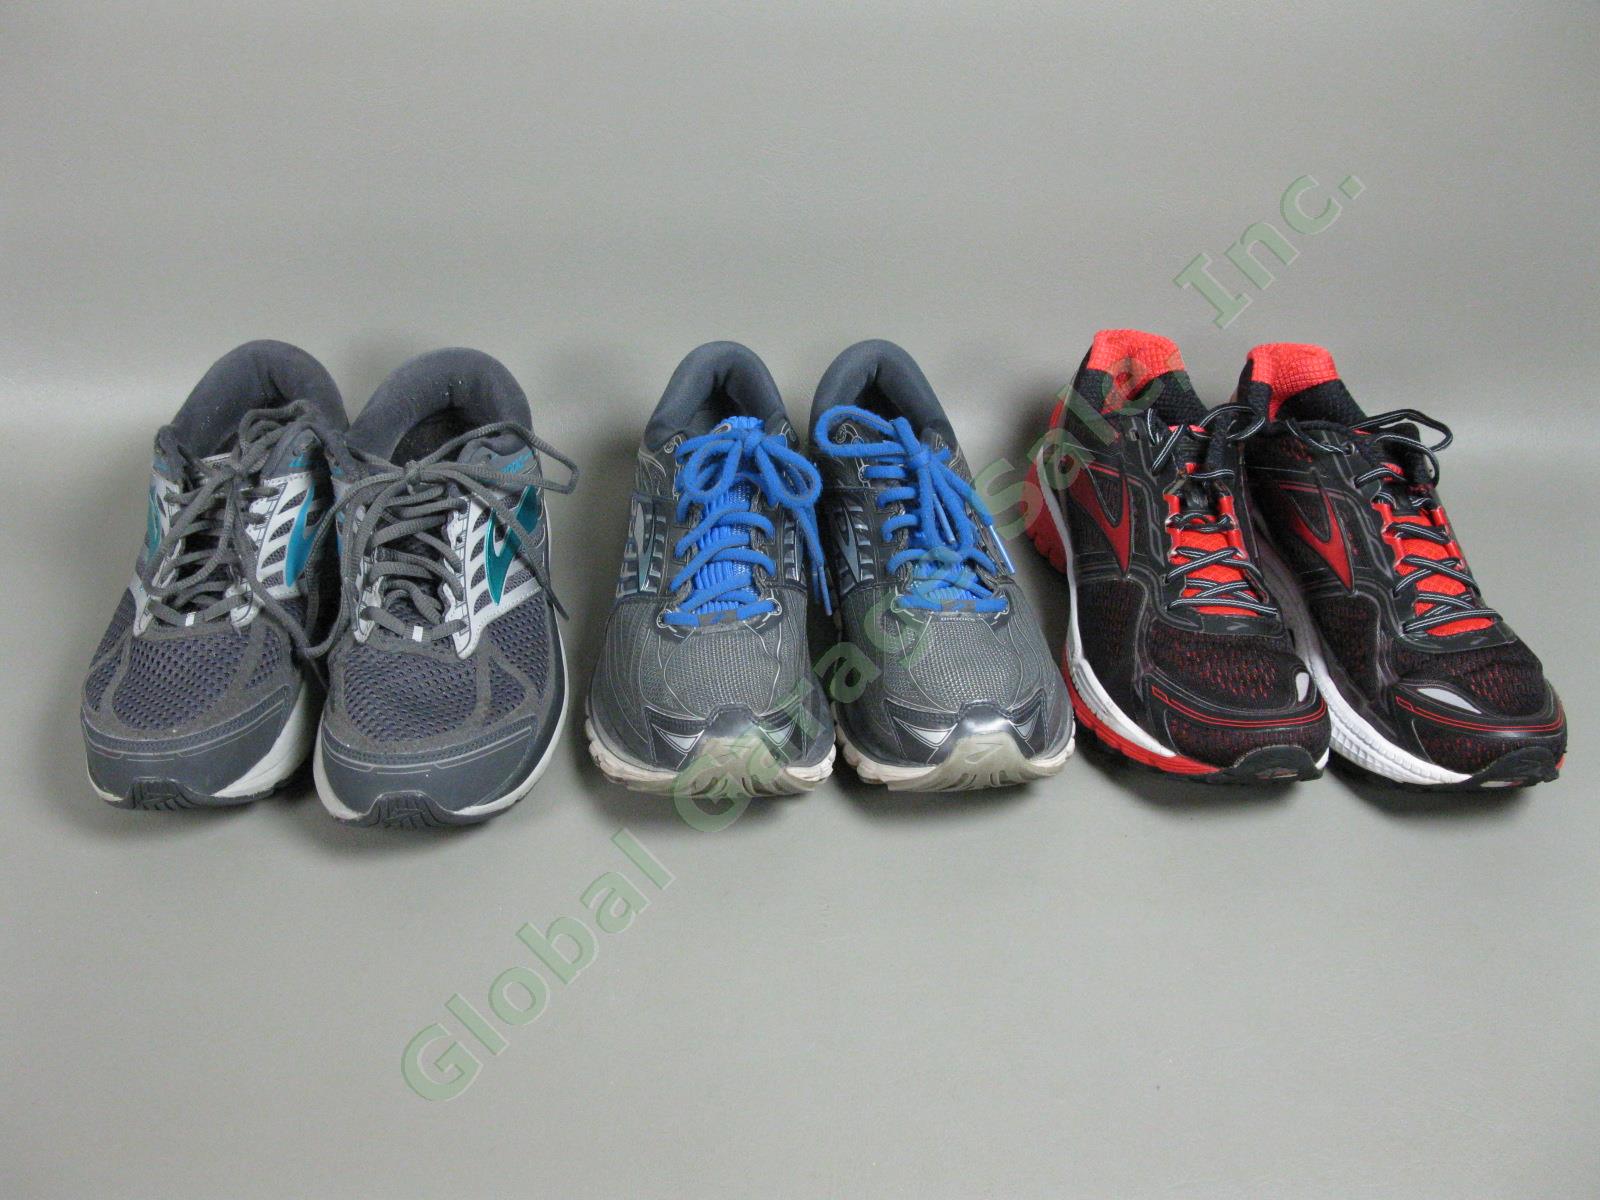 10 Pairs Mens Sneaker Shoe Lot New Balance Under Armour Asics Brooks Size 8.5-11 5